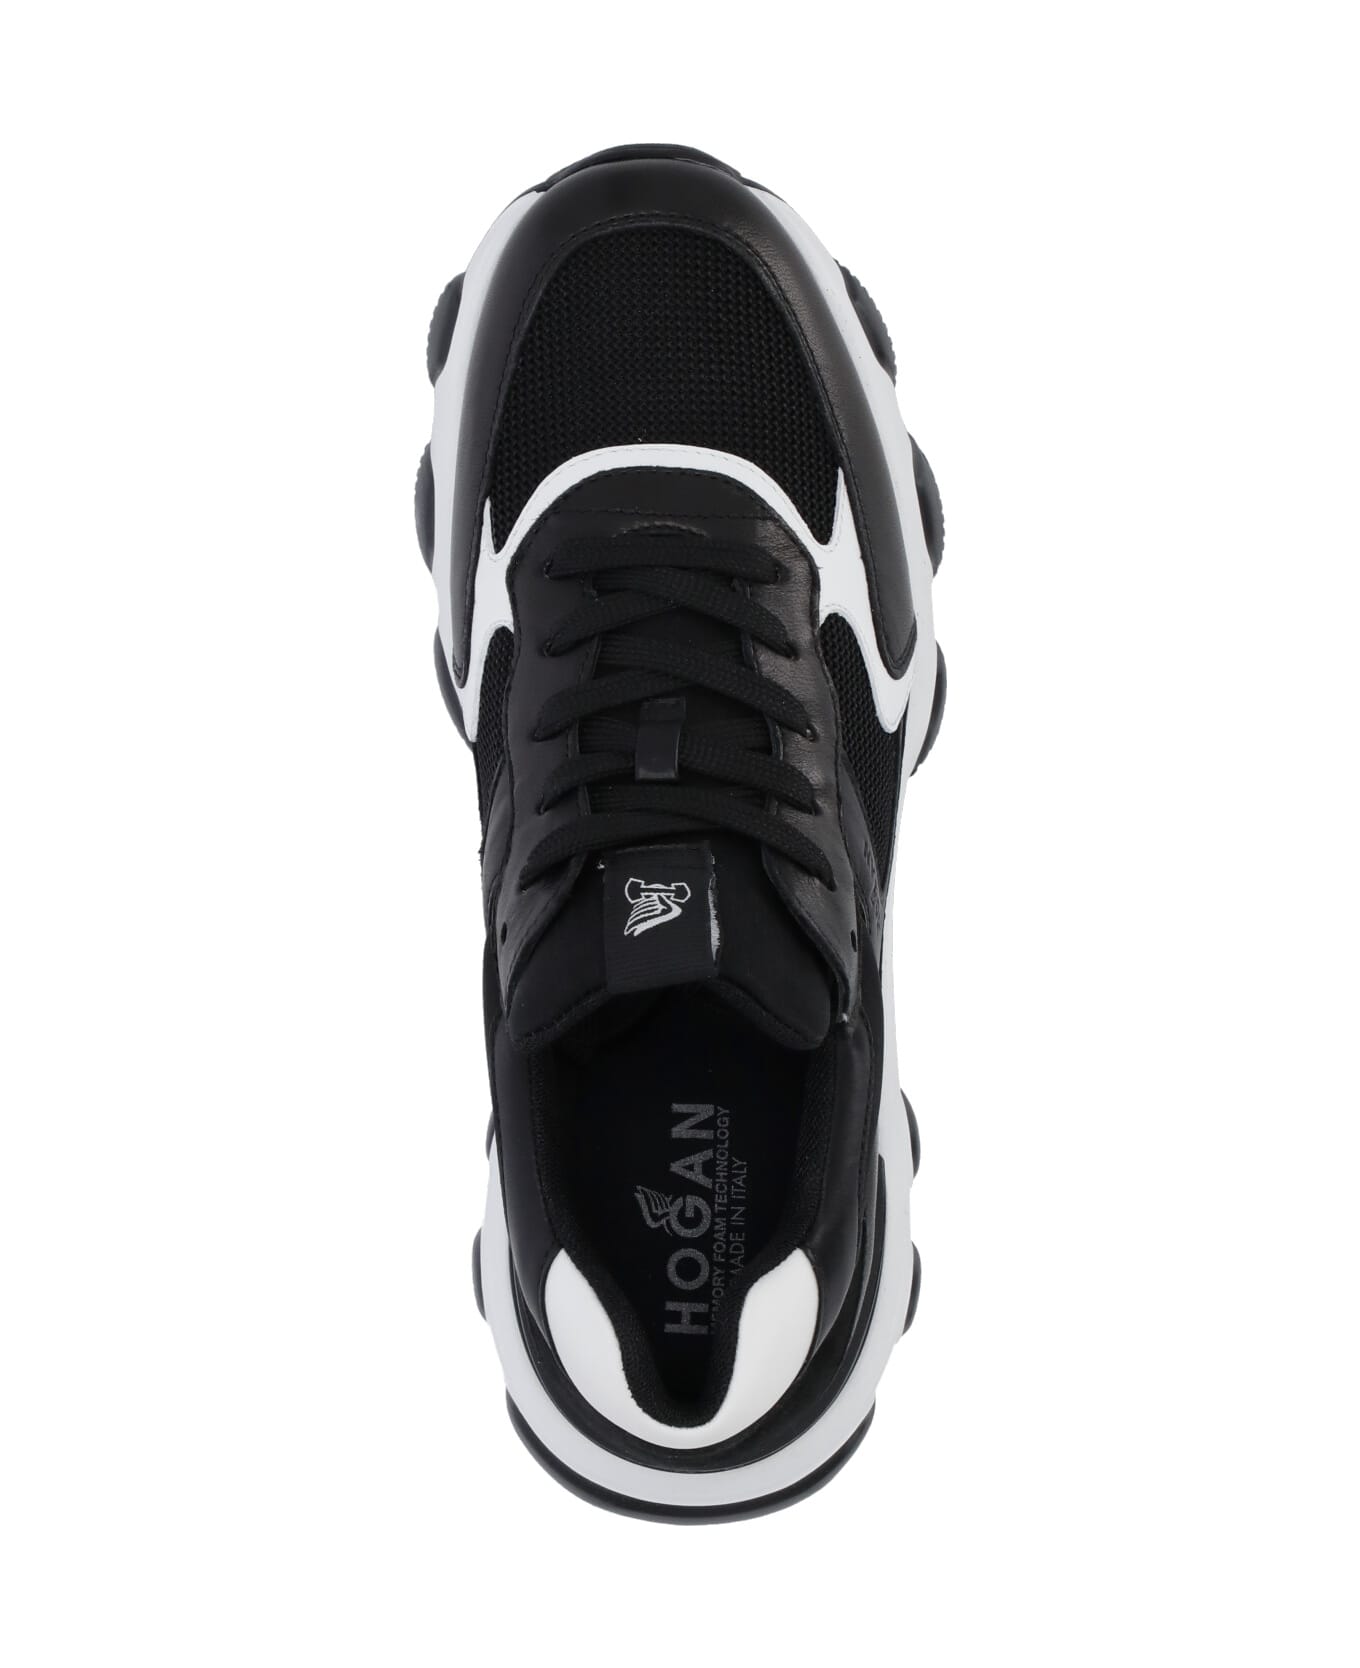 Hogan Hyperactive - Leather Sneakers - Black